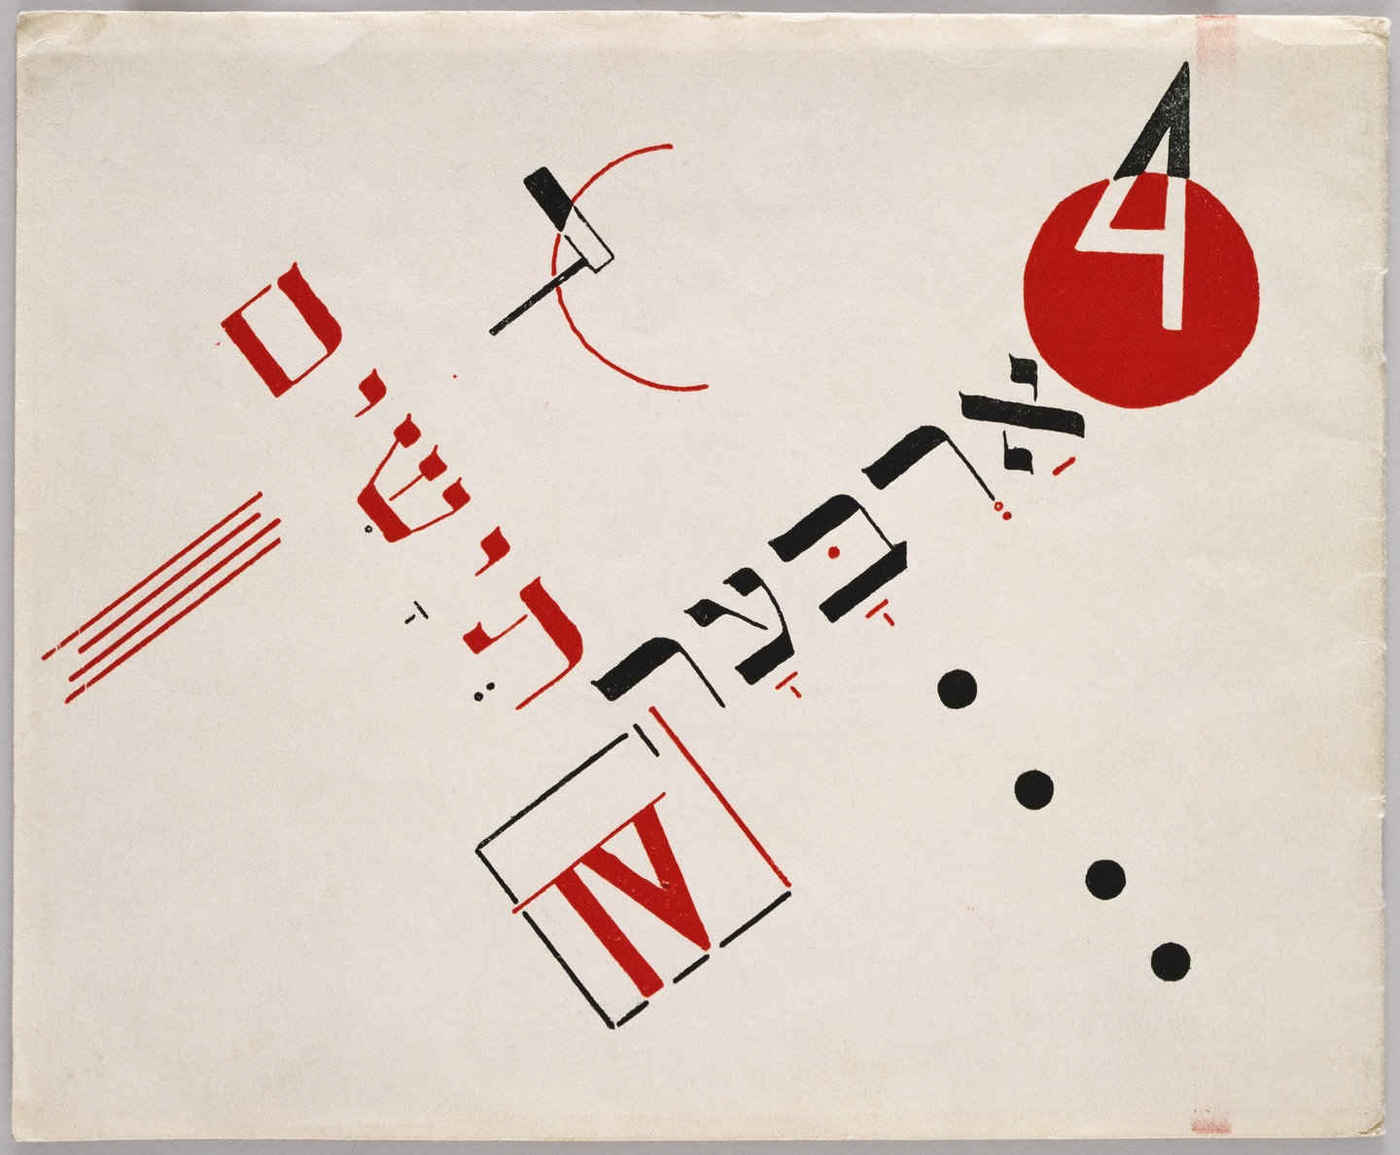 “Four Billy Goats”, Lissitzky 1922